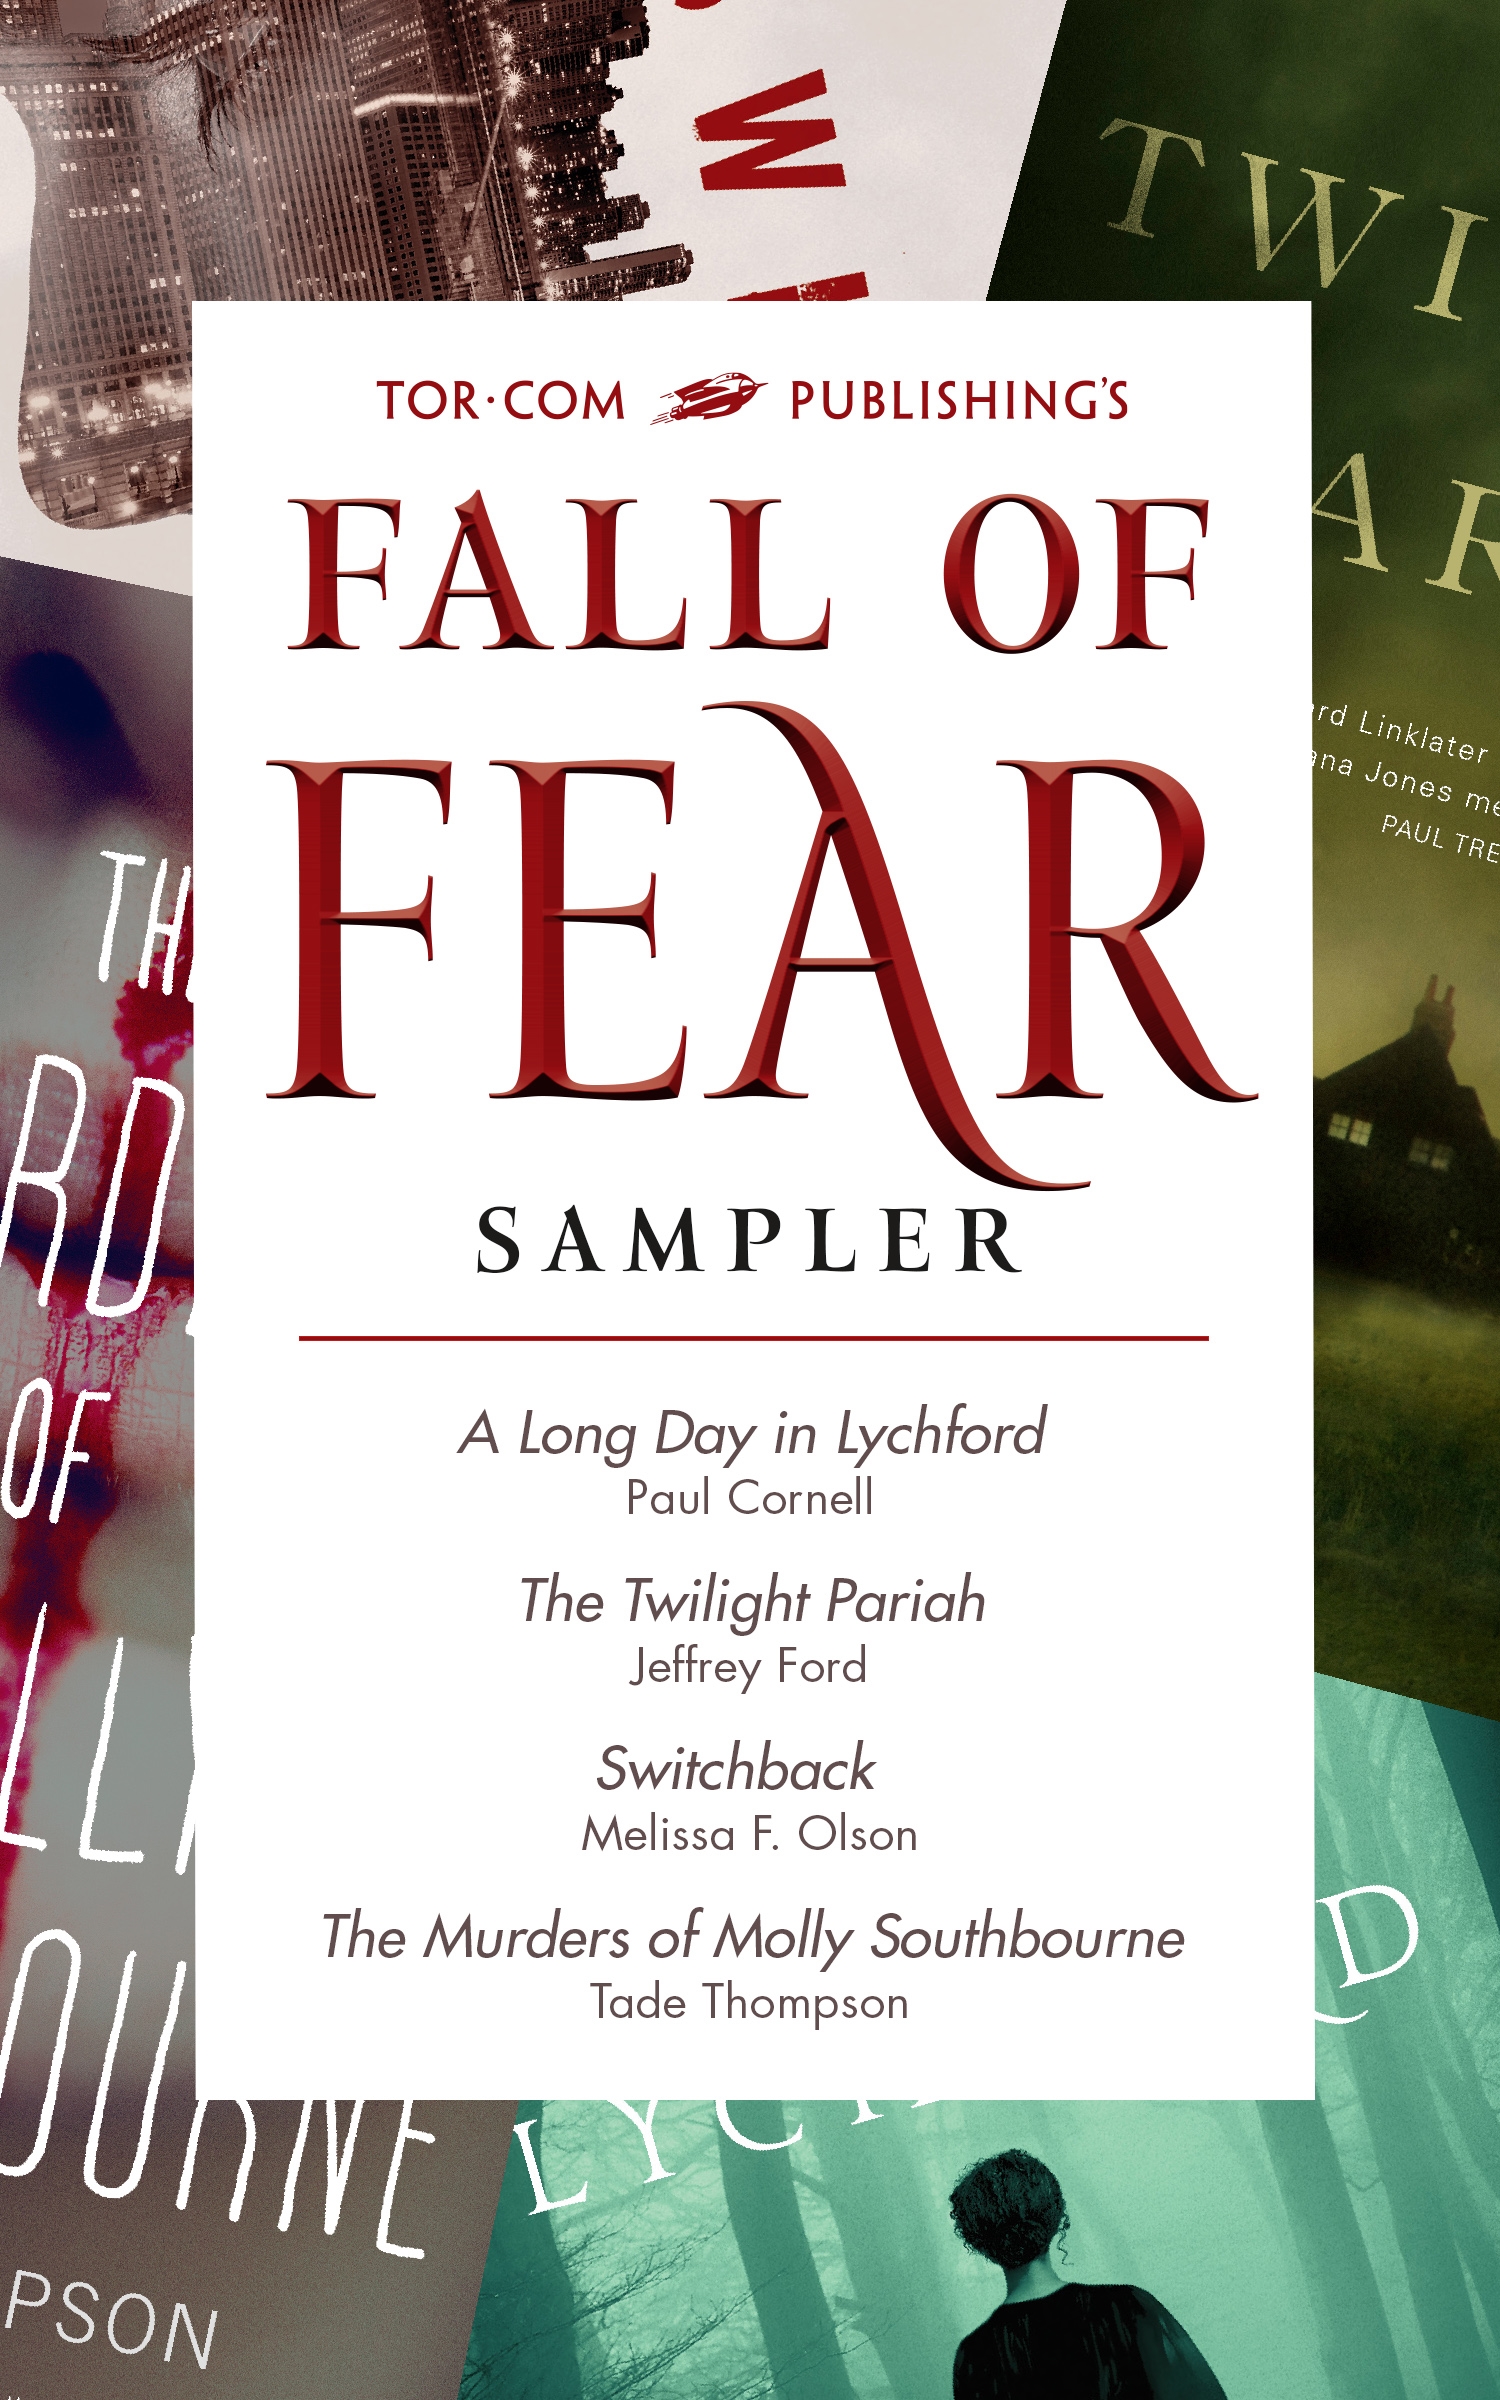 Tor.com Publishing's Fall of Fear Sampler by Paul Cornell, Jeffrey Ford, Melissa F. Olson, Tade Thompson